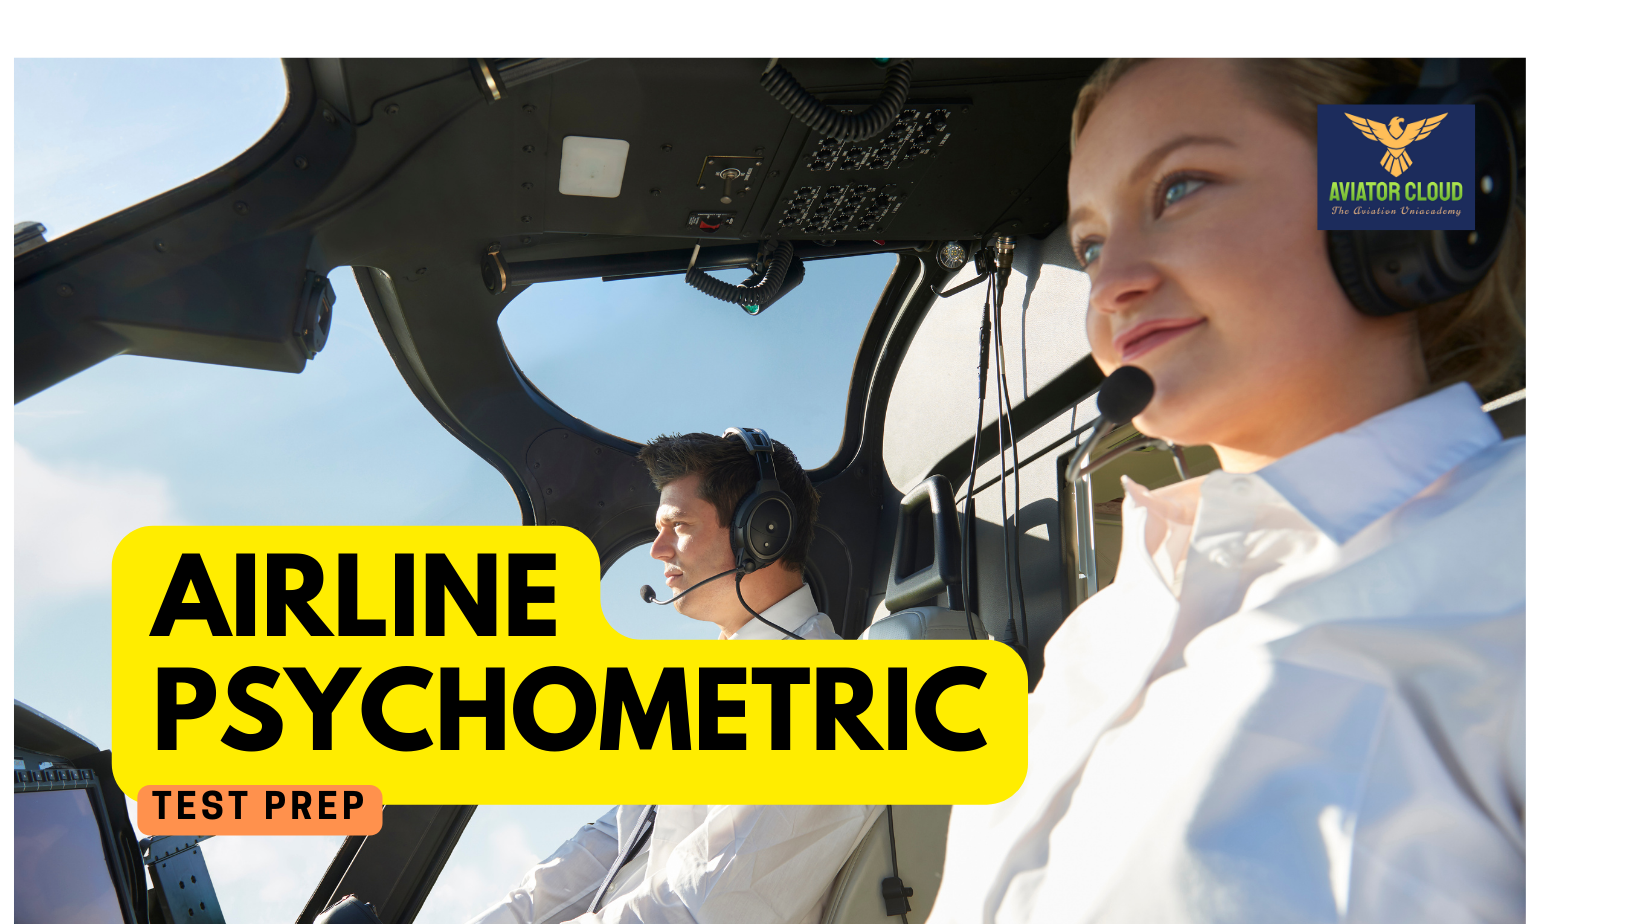 psychometric-test-prep-for-pilots-airline-pilot-aptitude-test-avia